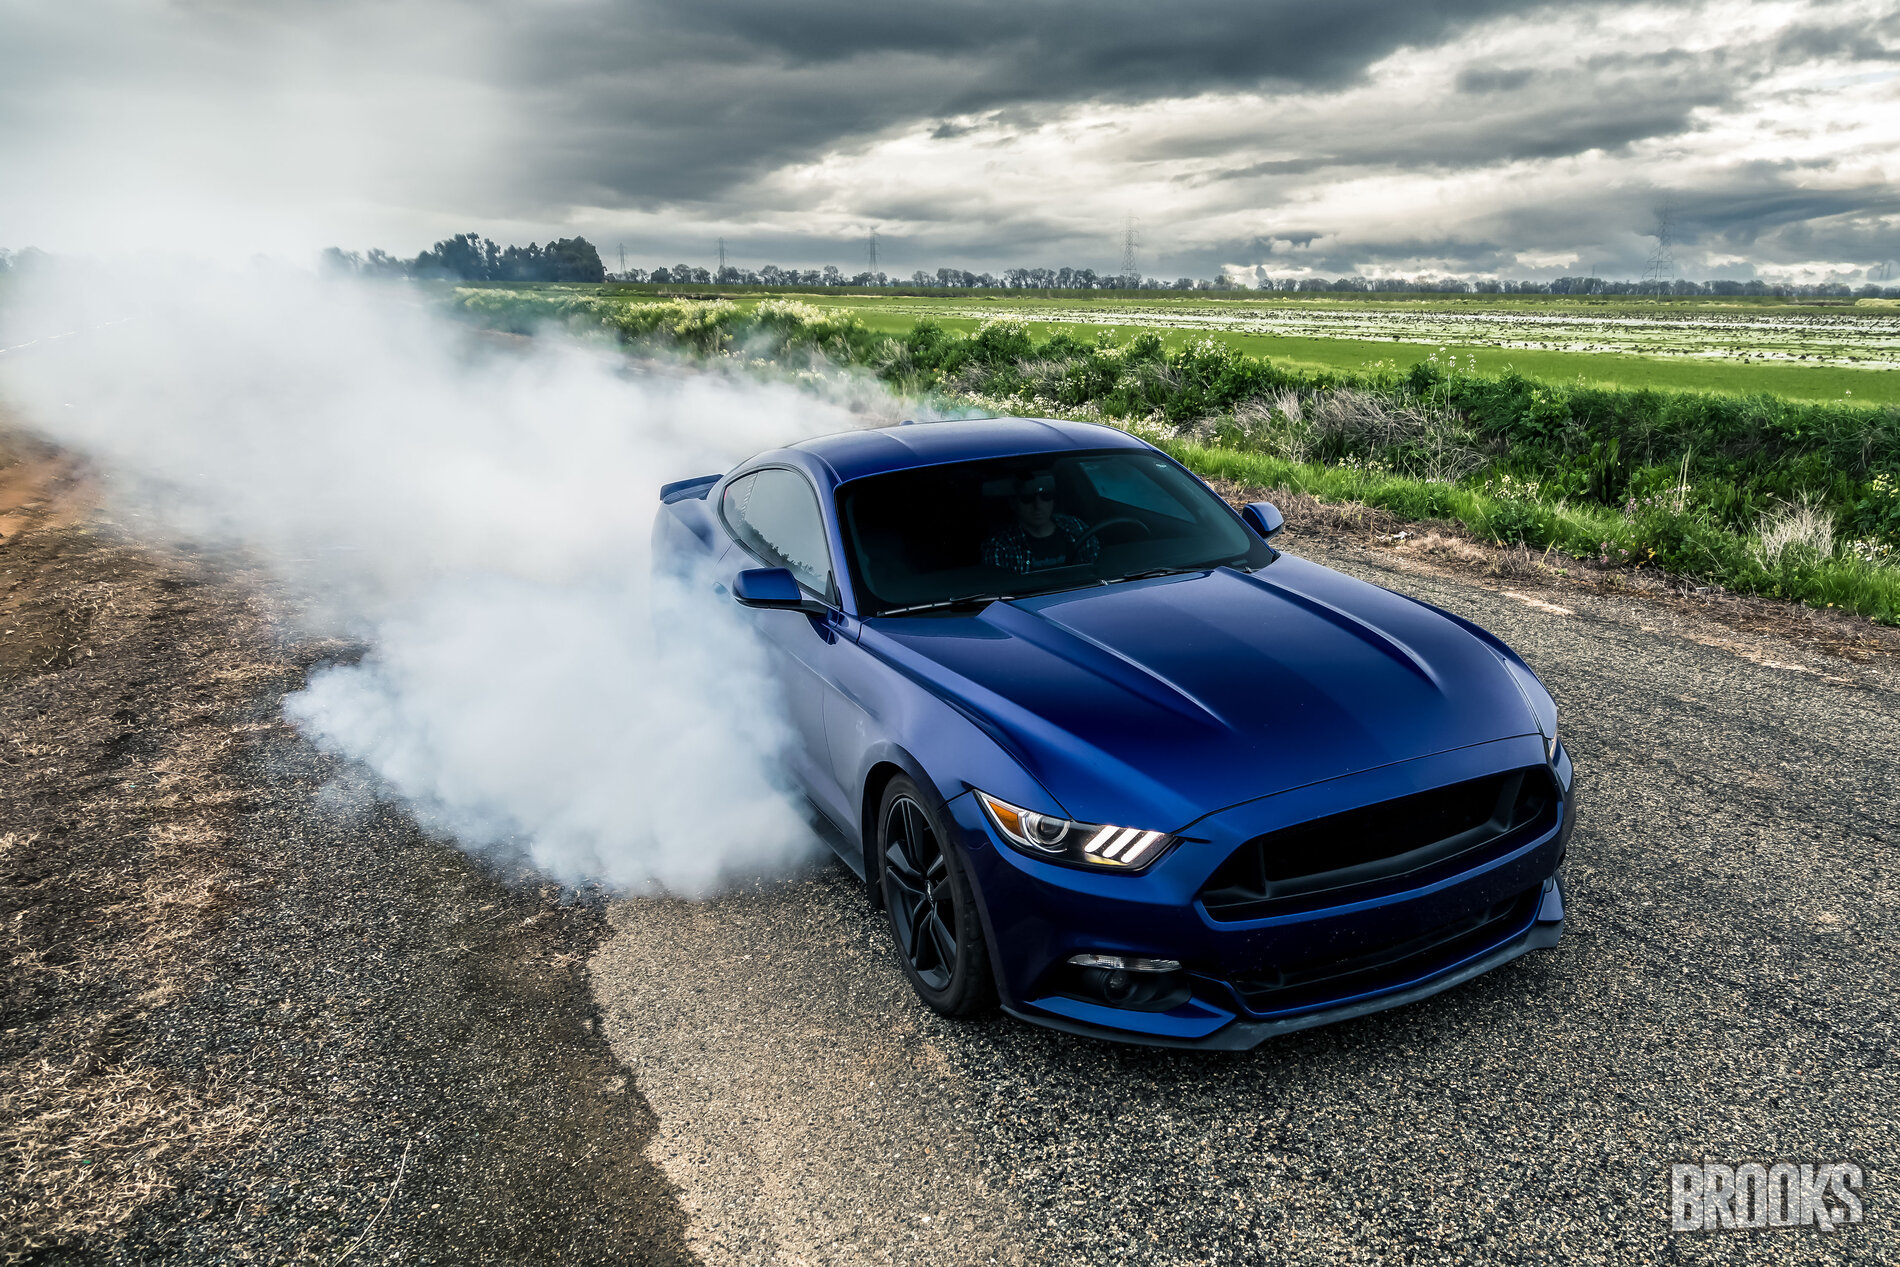 Mustang burnout2.jpg